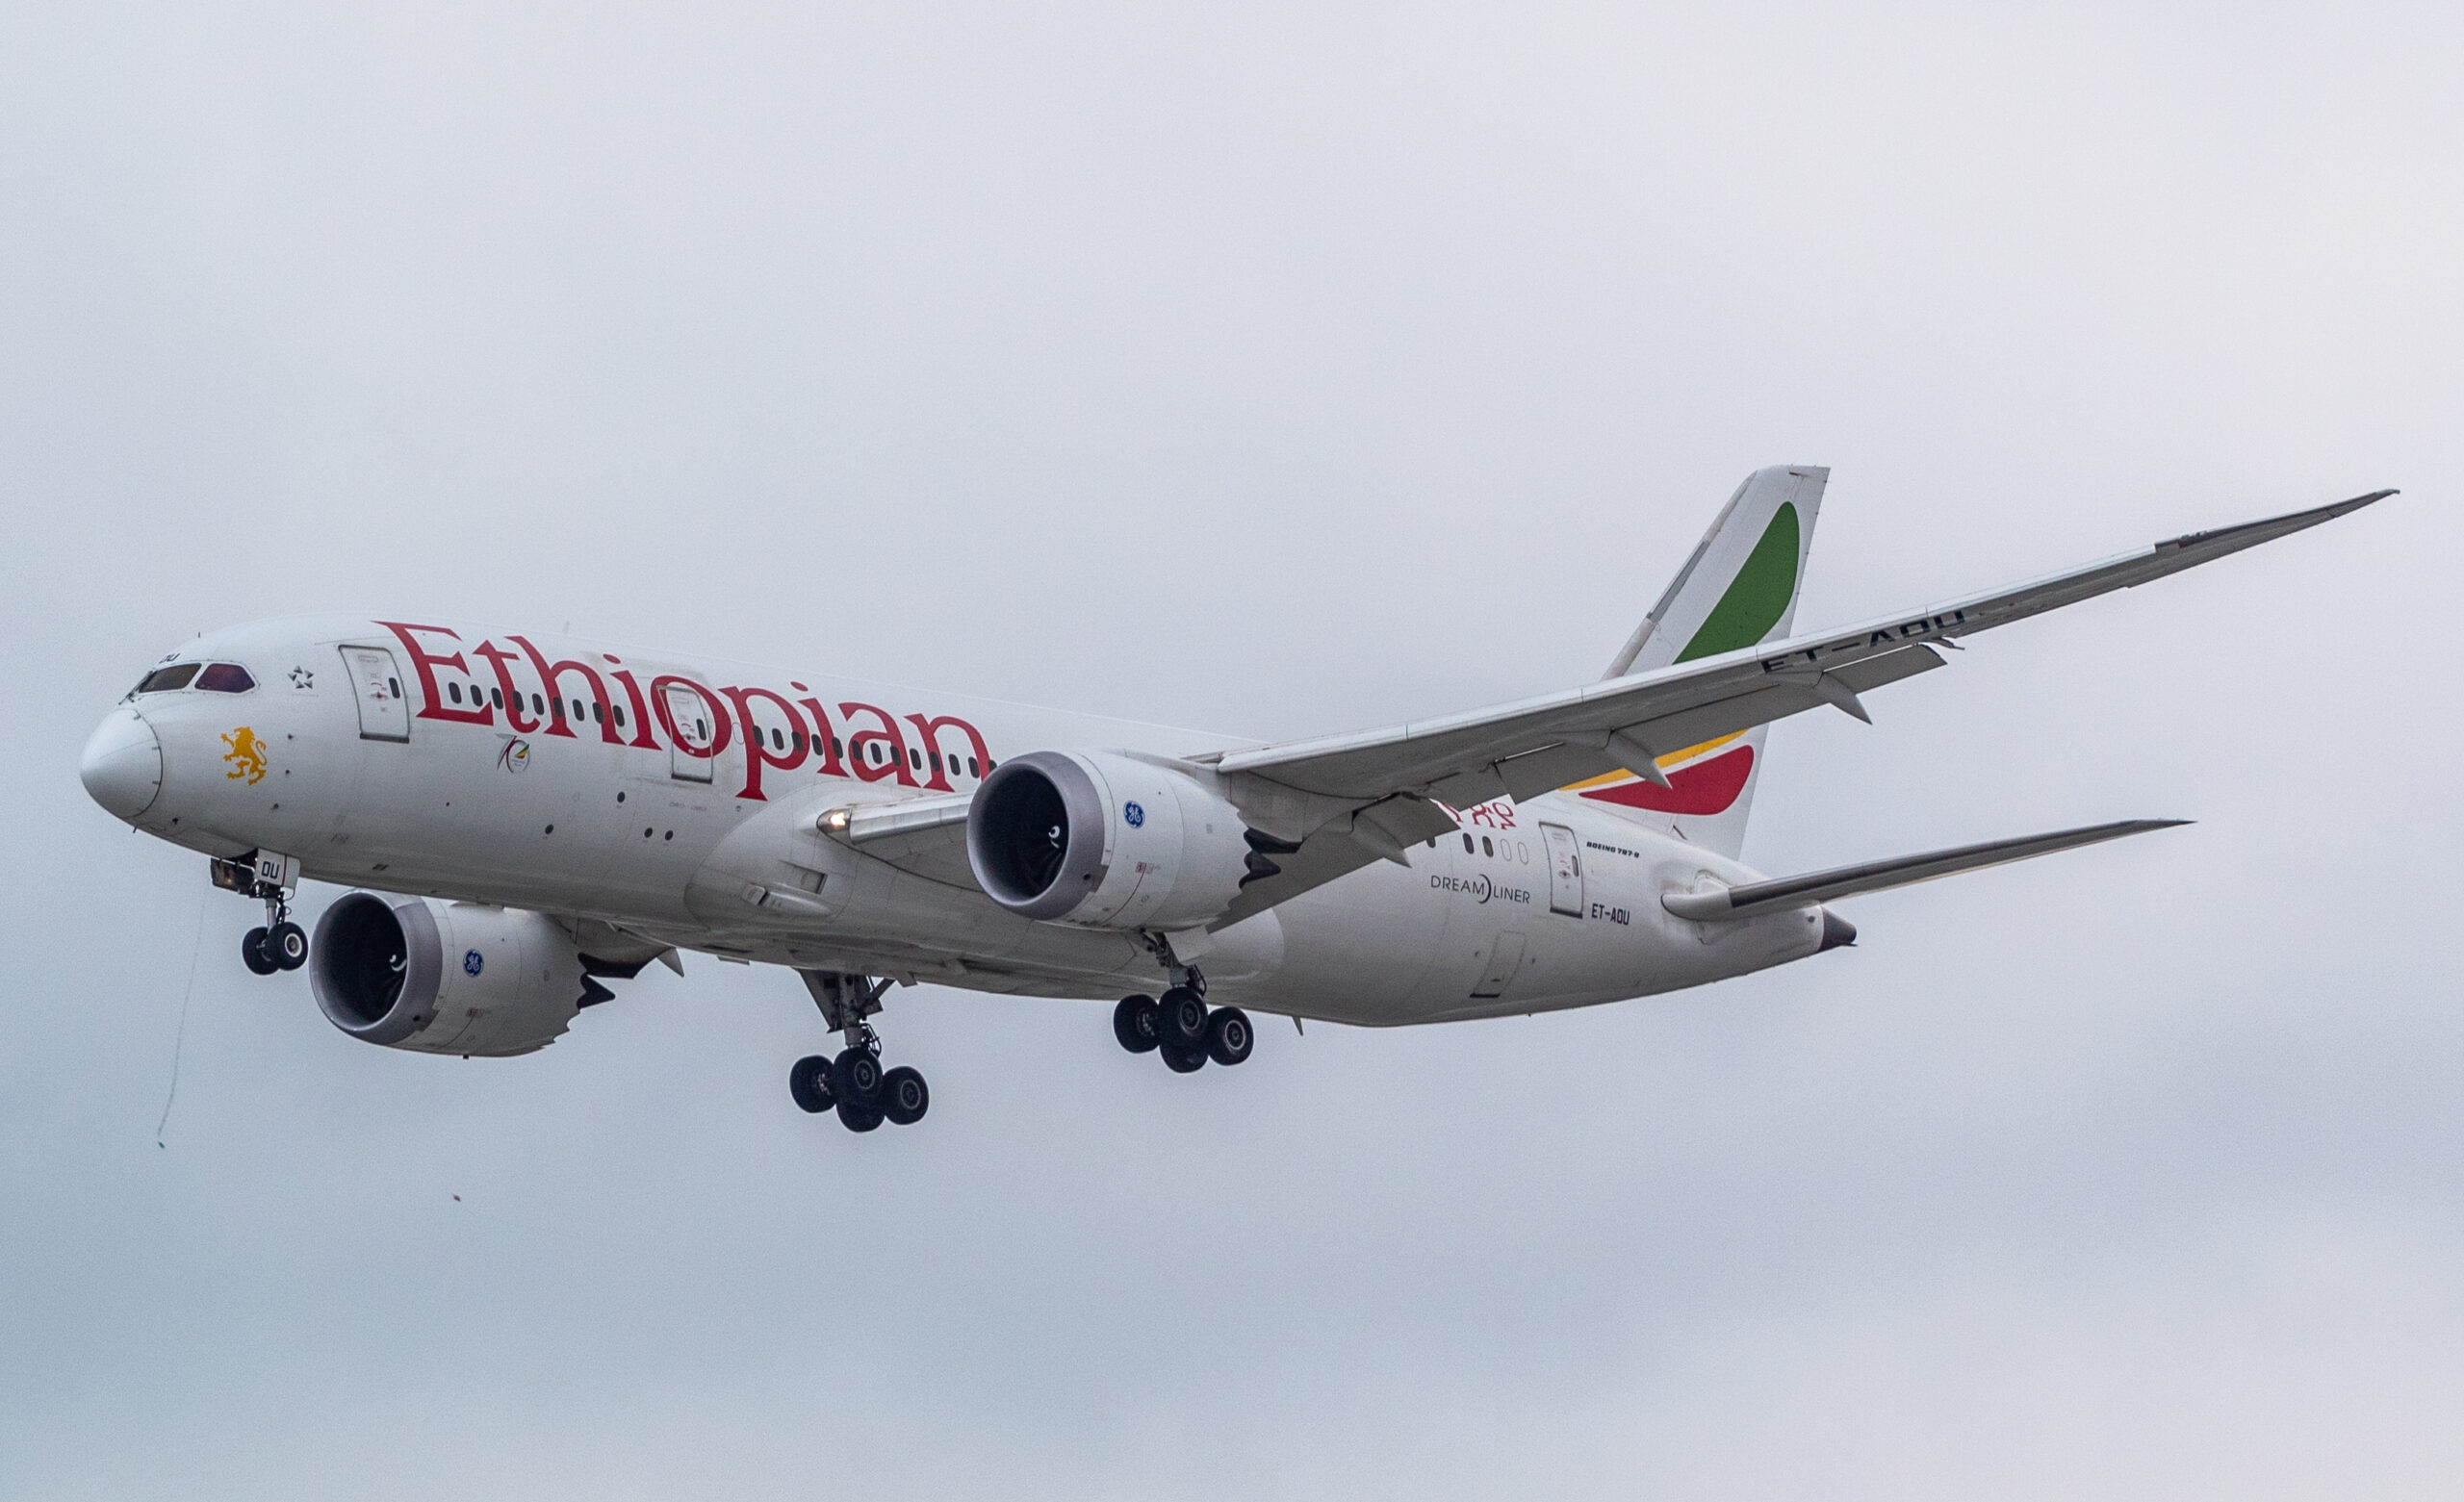 ET-AOU – Boeing 787-8 Dreamliner – Ethiopian Airlines - Blog do Spotter